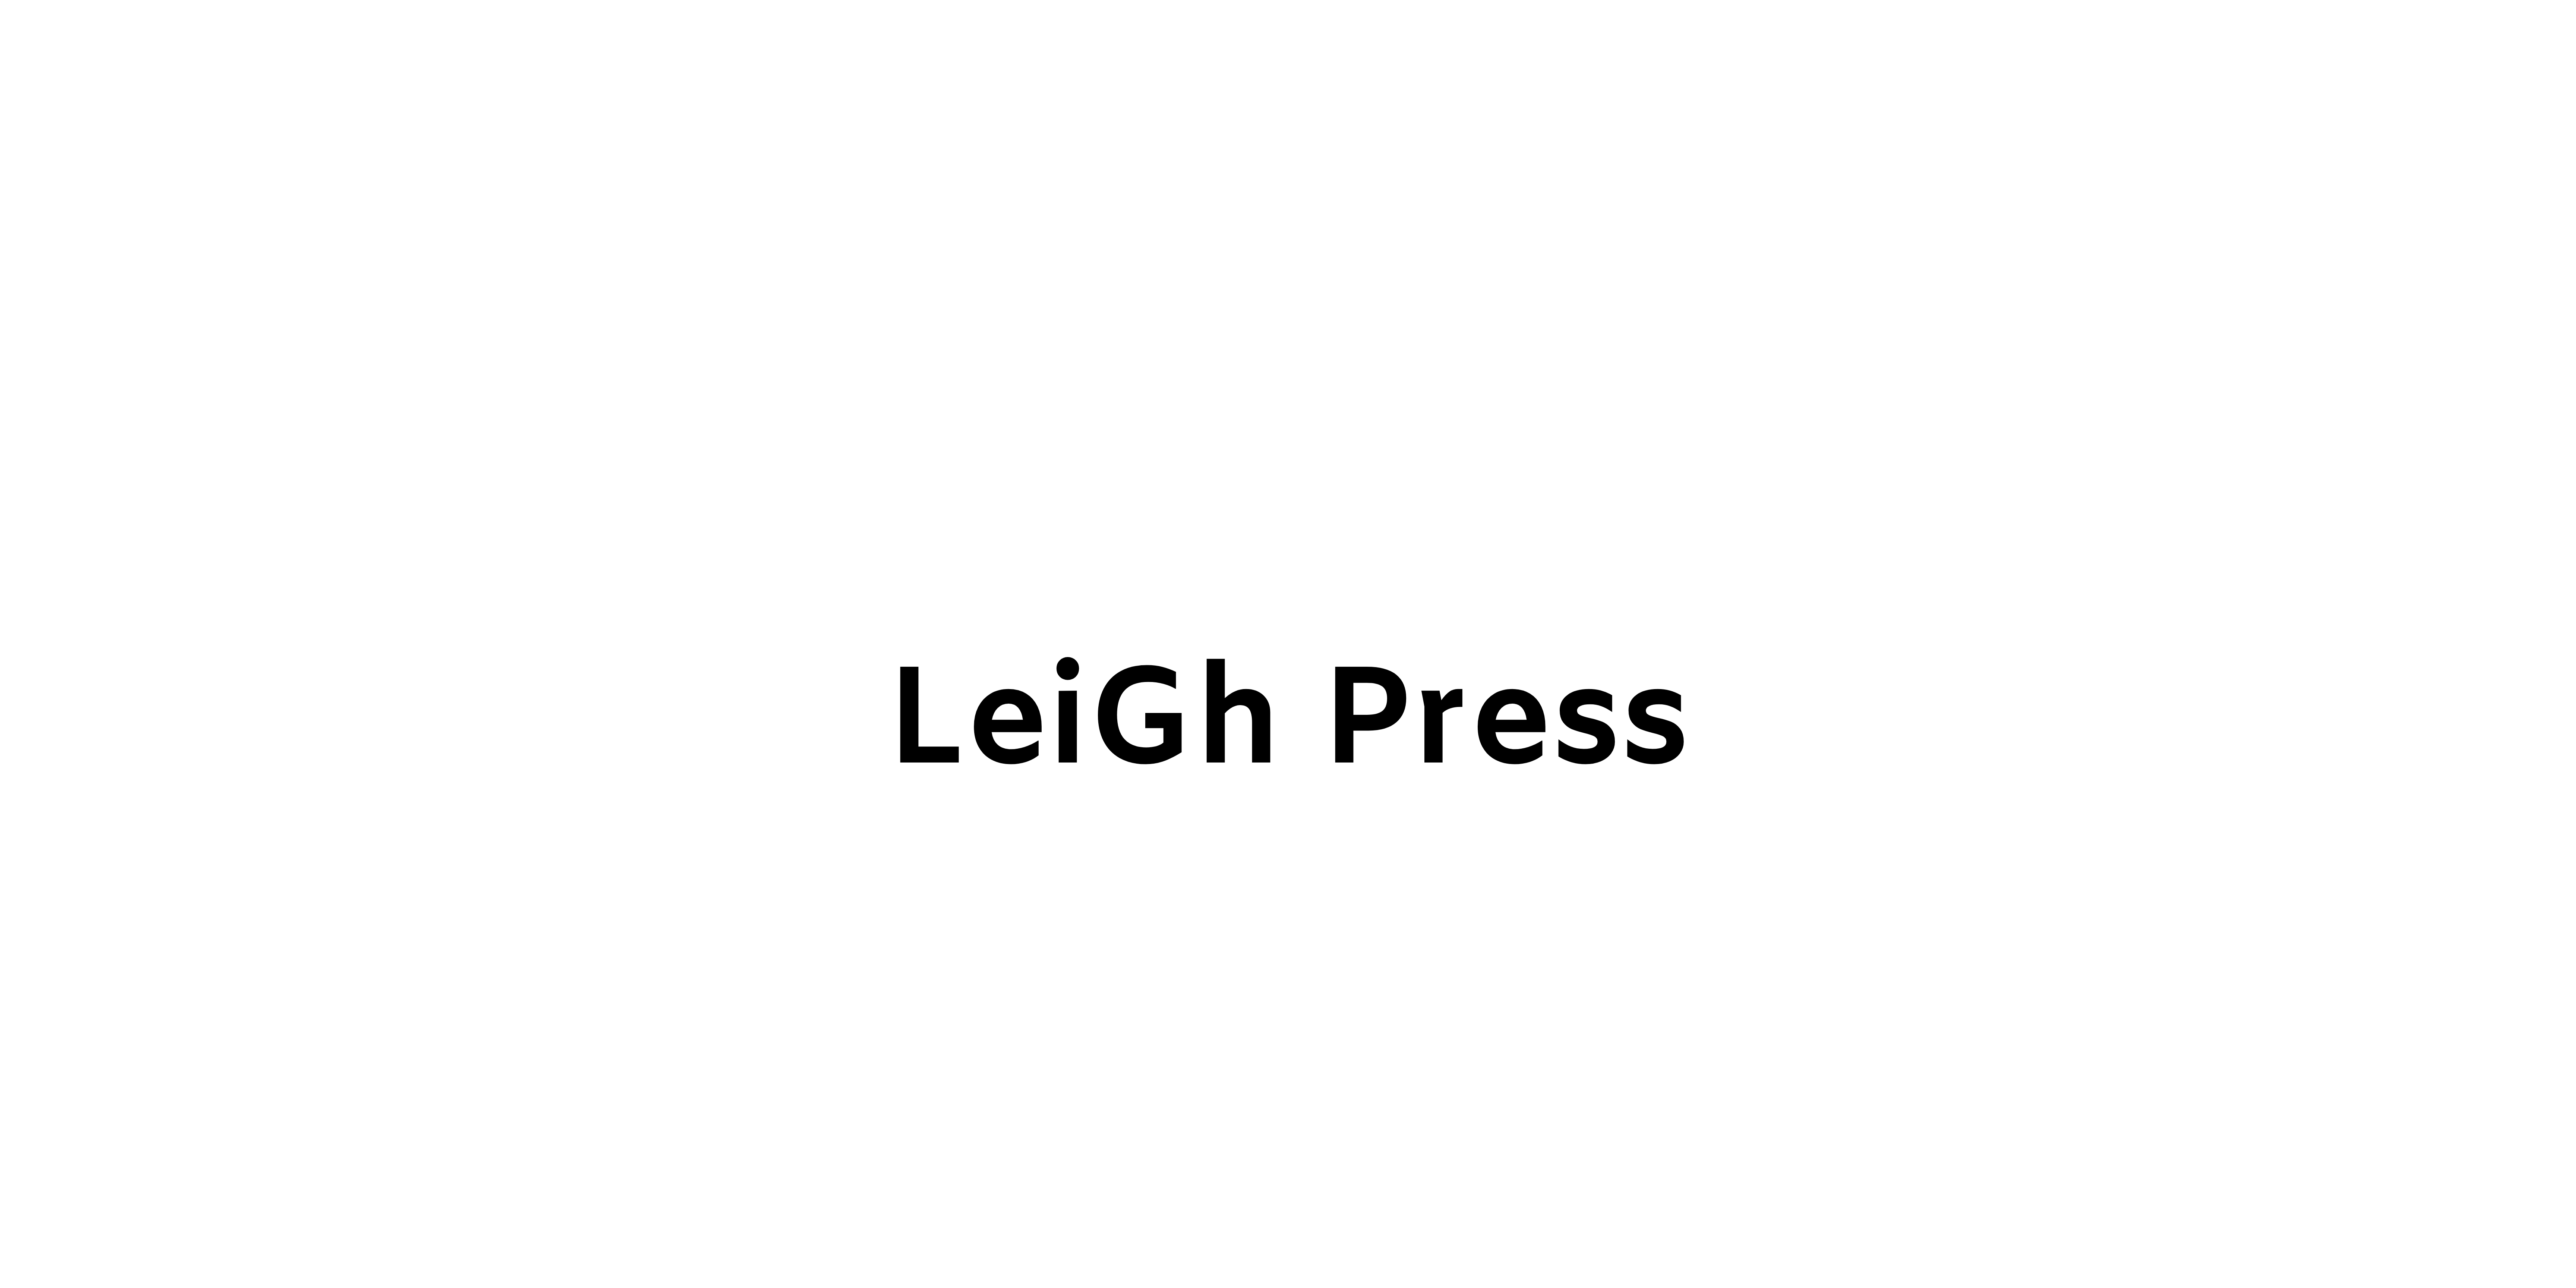 leigh press